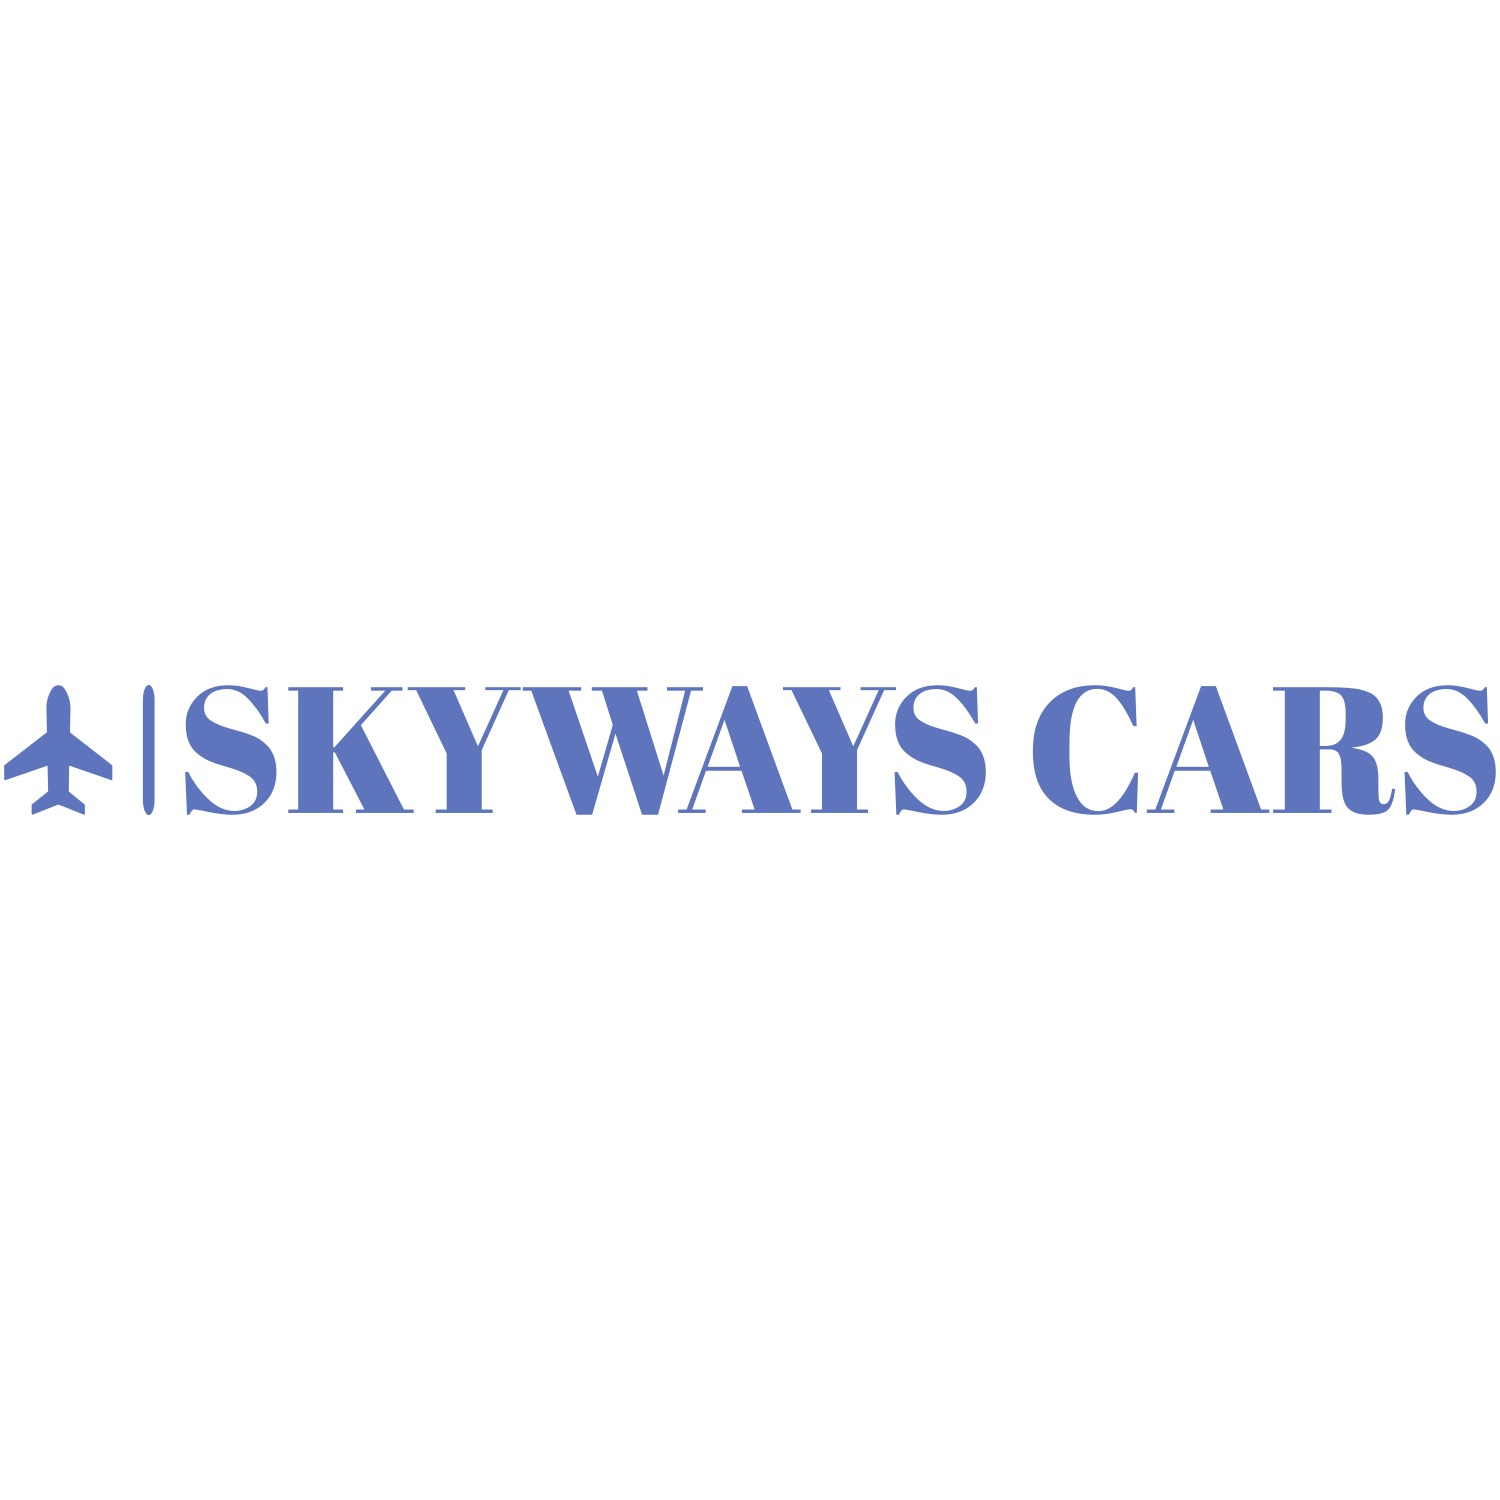 Skyways Cars - Stansted, Essex CM24 1SJ - 01279 927092 | ShowMeLocal.com